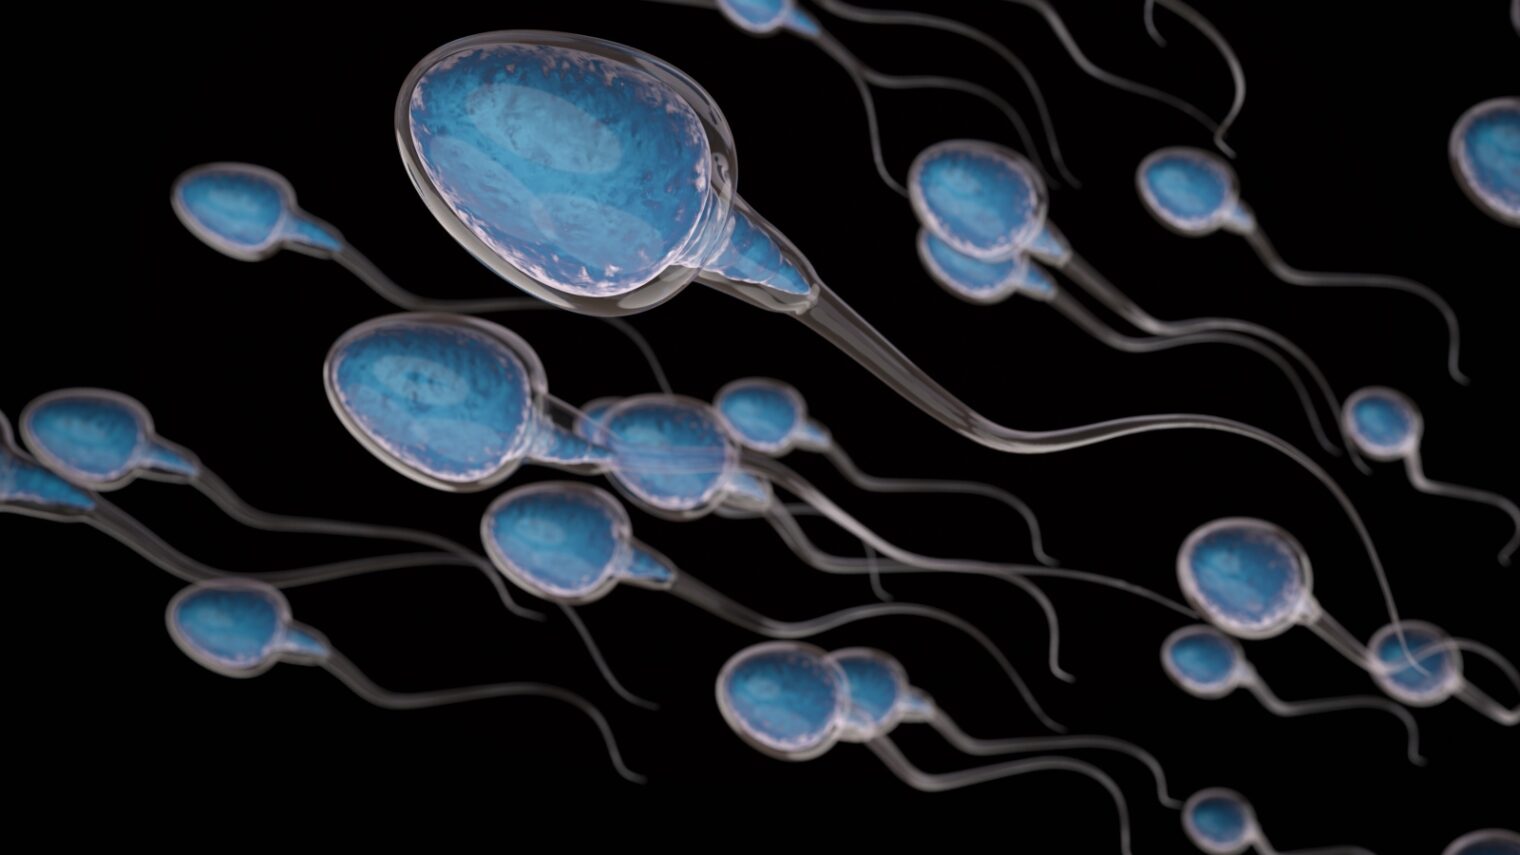 Sperm image by Phonlamai Photo/Shutterstock.com